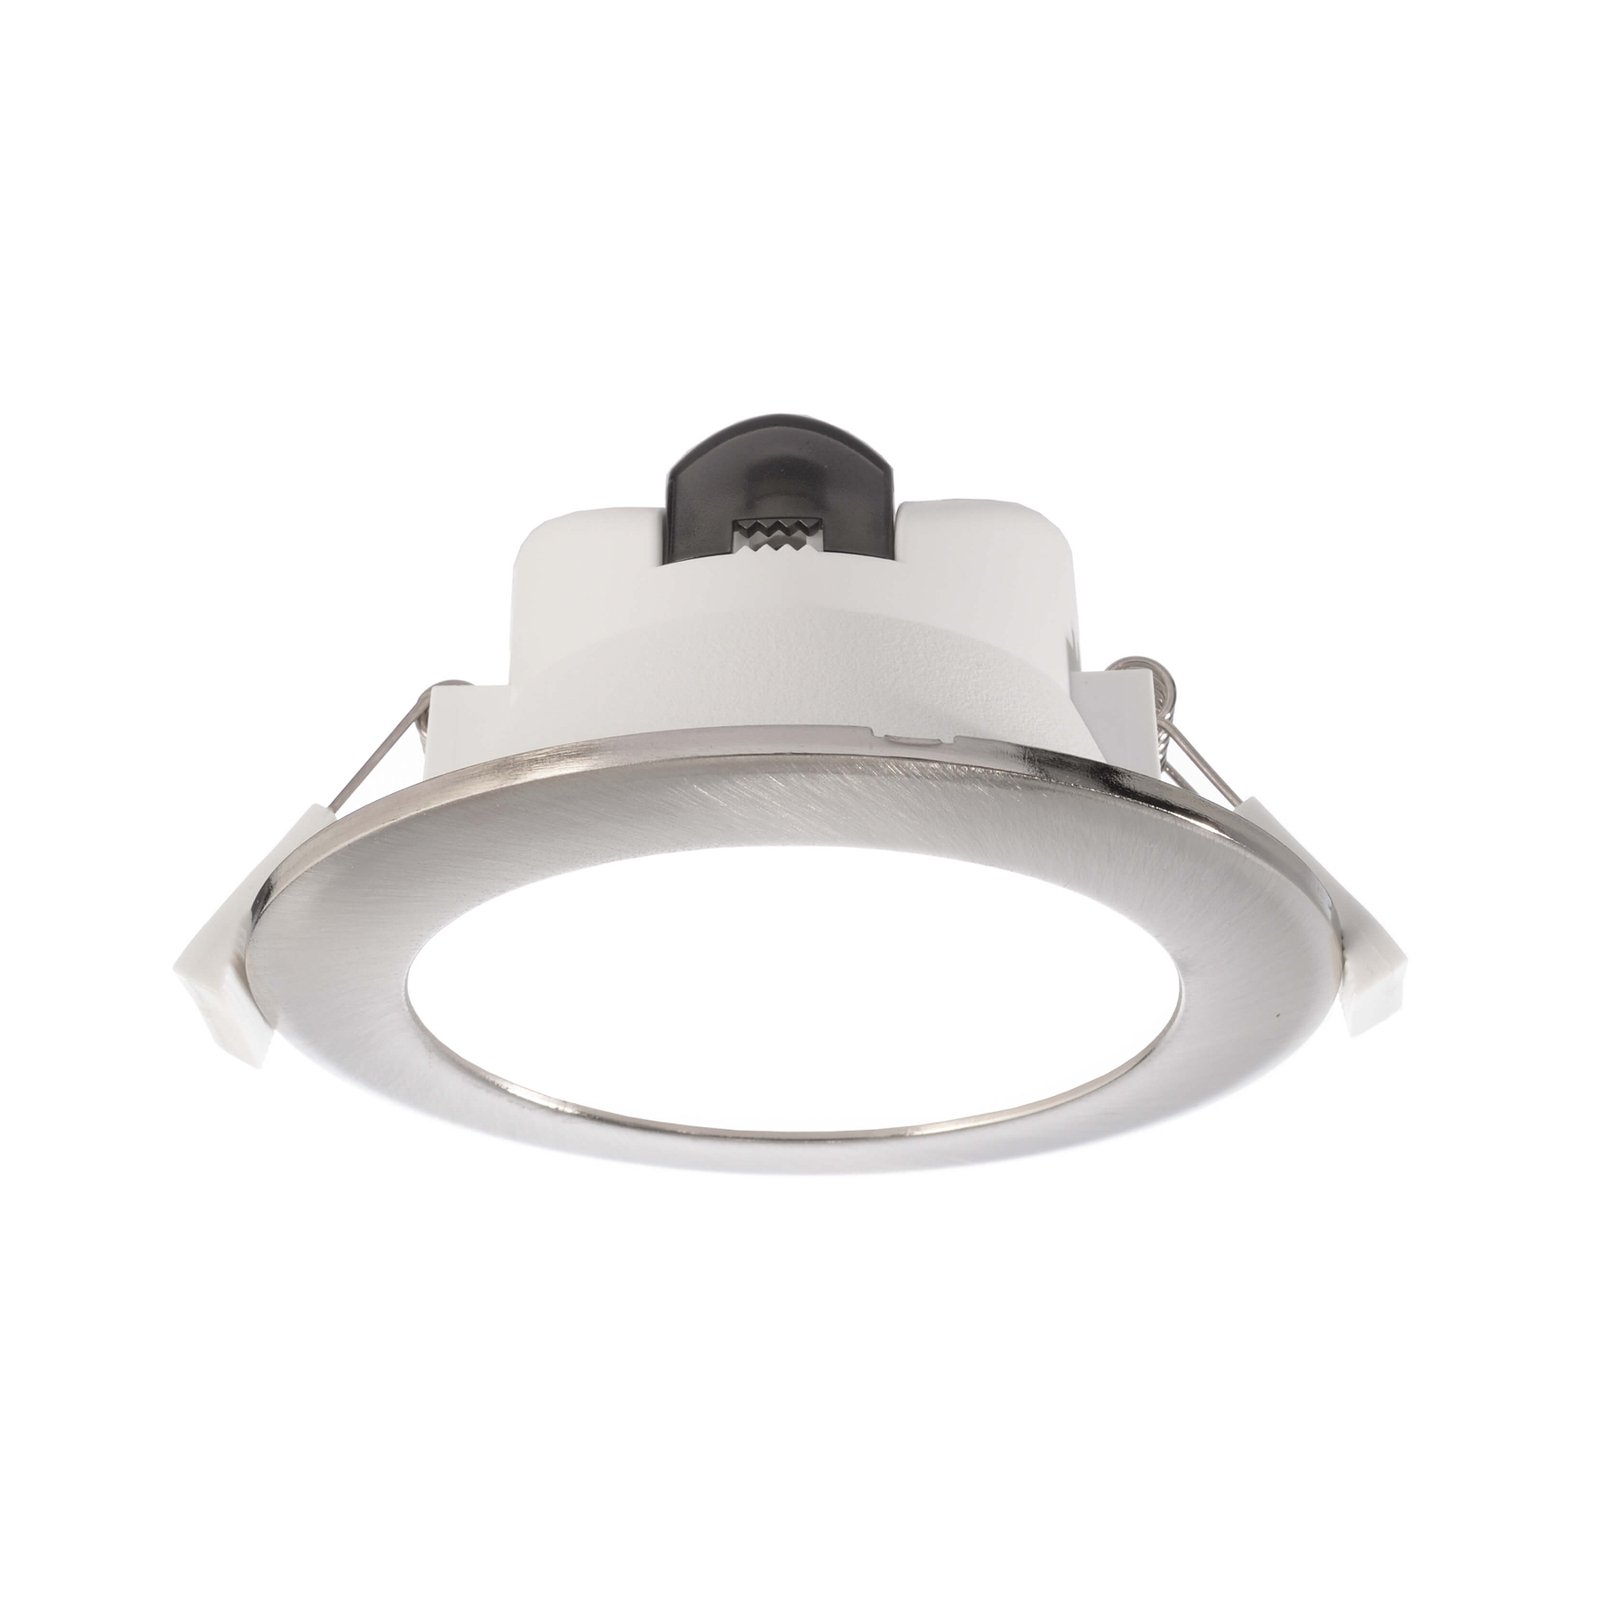 LED-innfellingslampe Acrux 90, hvit, Ø 11,3 cm